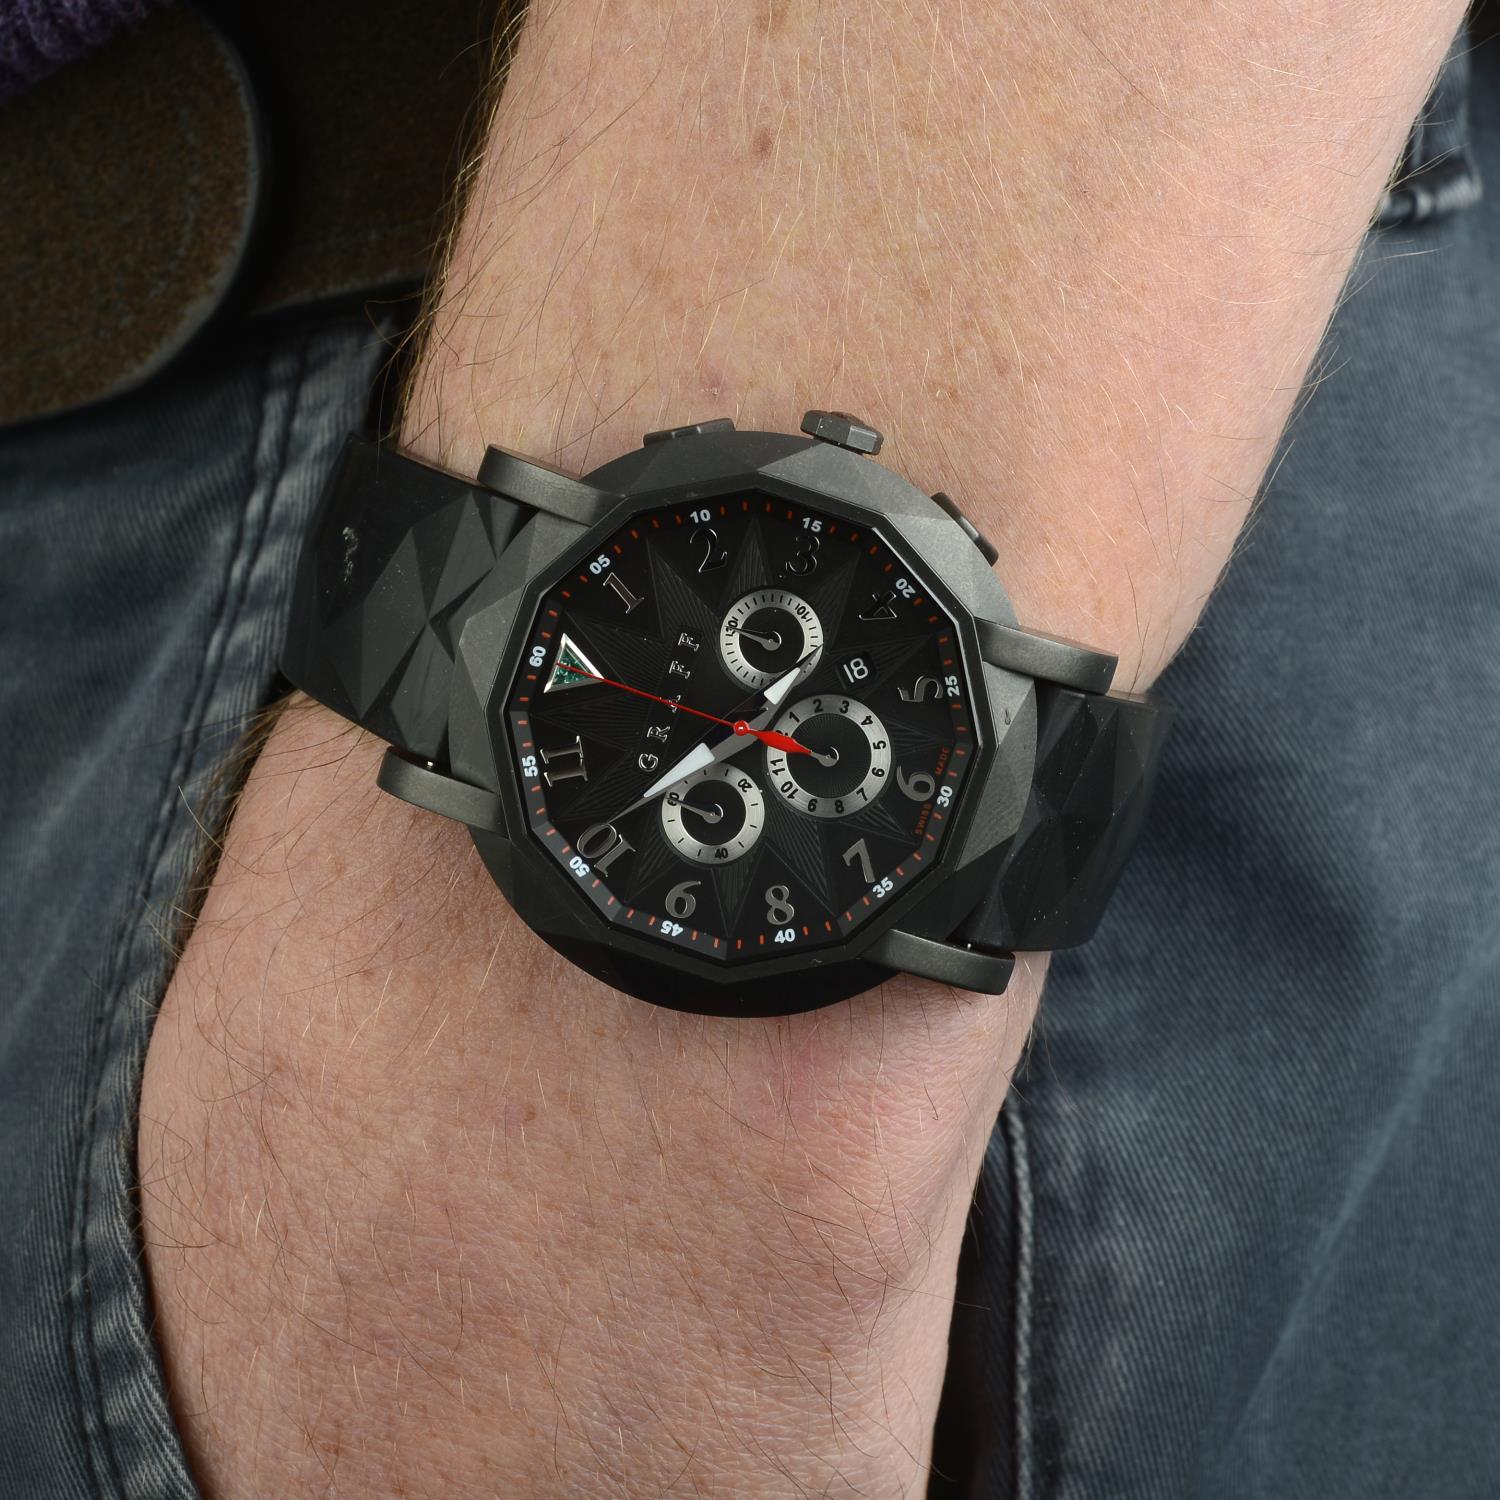 GRAFF - a limited edition gentleman's ChronoGraff chronograph wrist watch. - Image 3 of 5